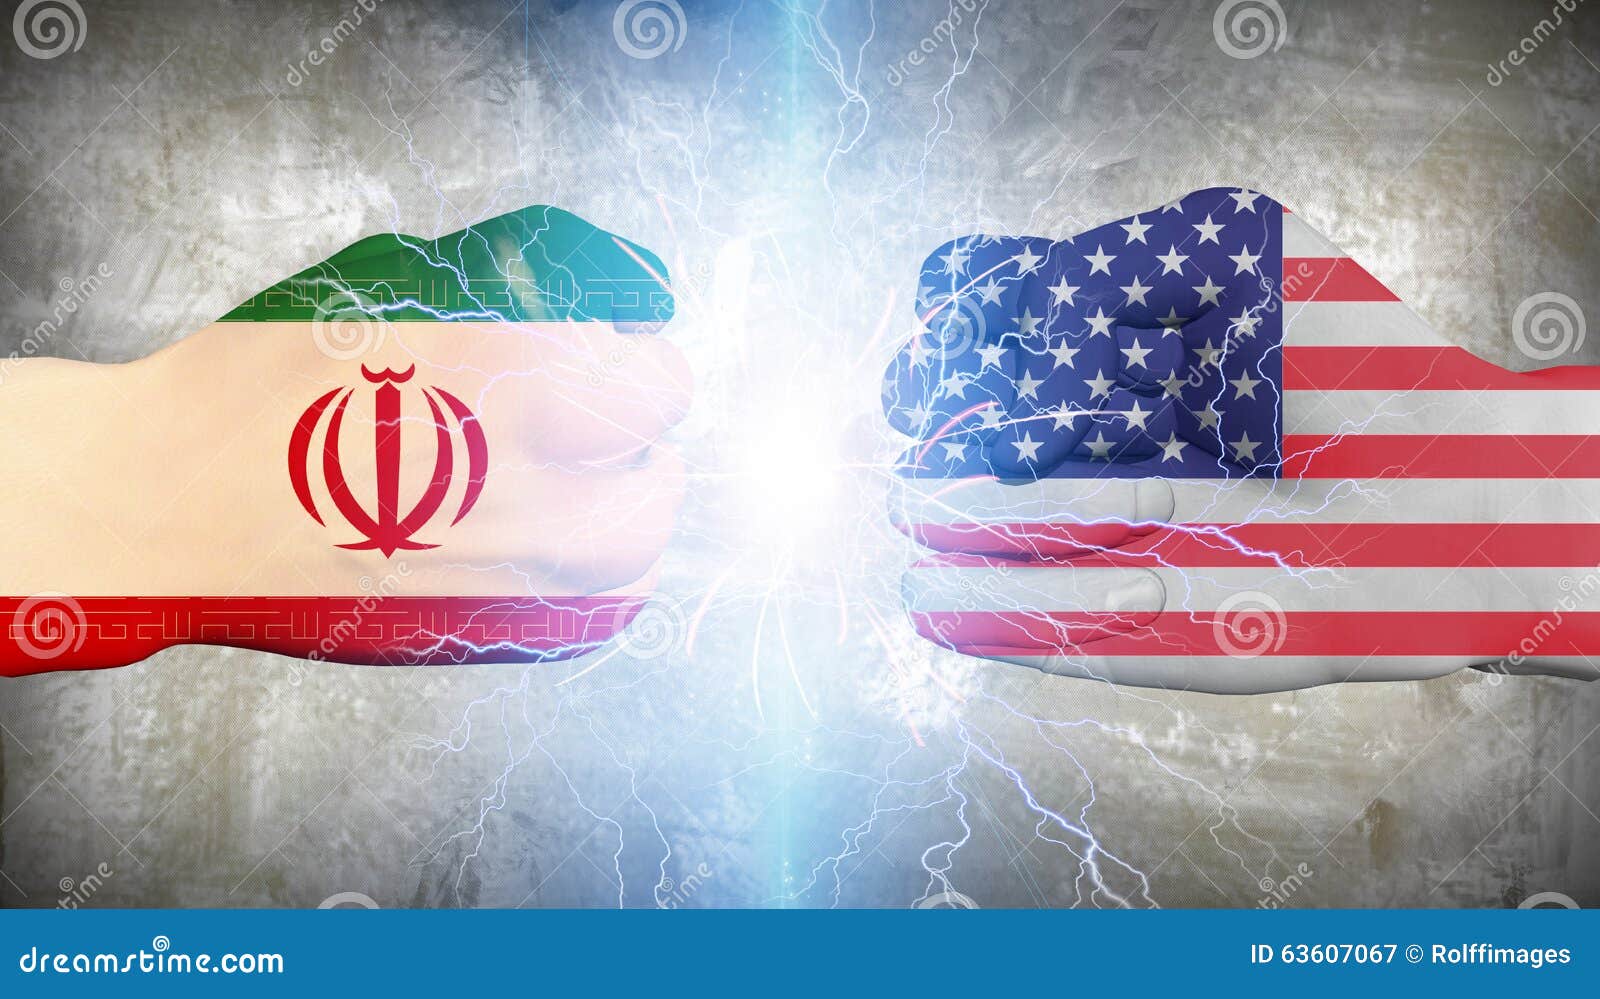 USA Vs Iran Stock Illustration - Image: 63607067